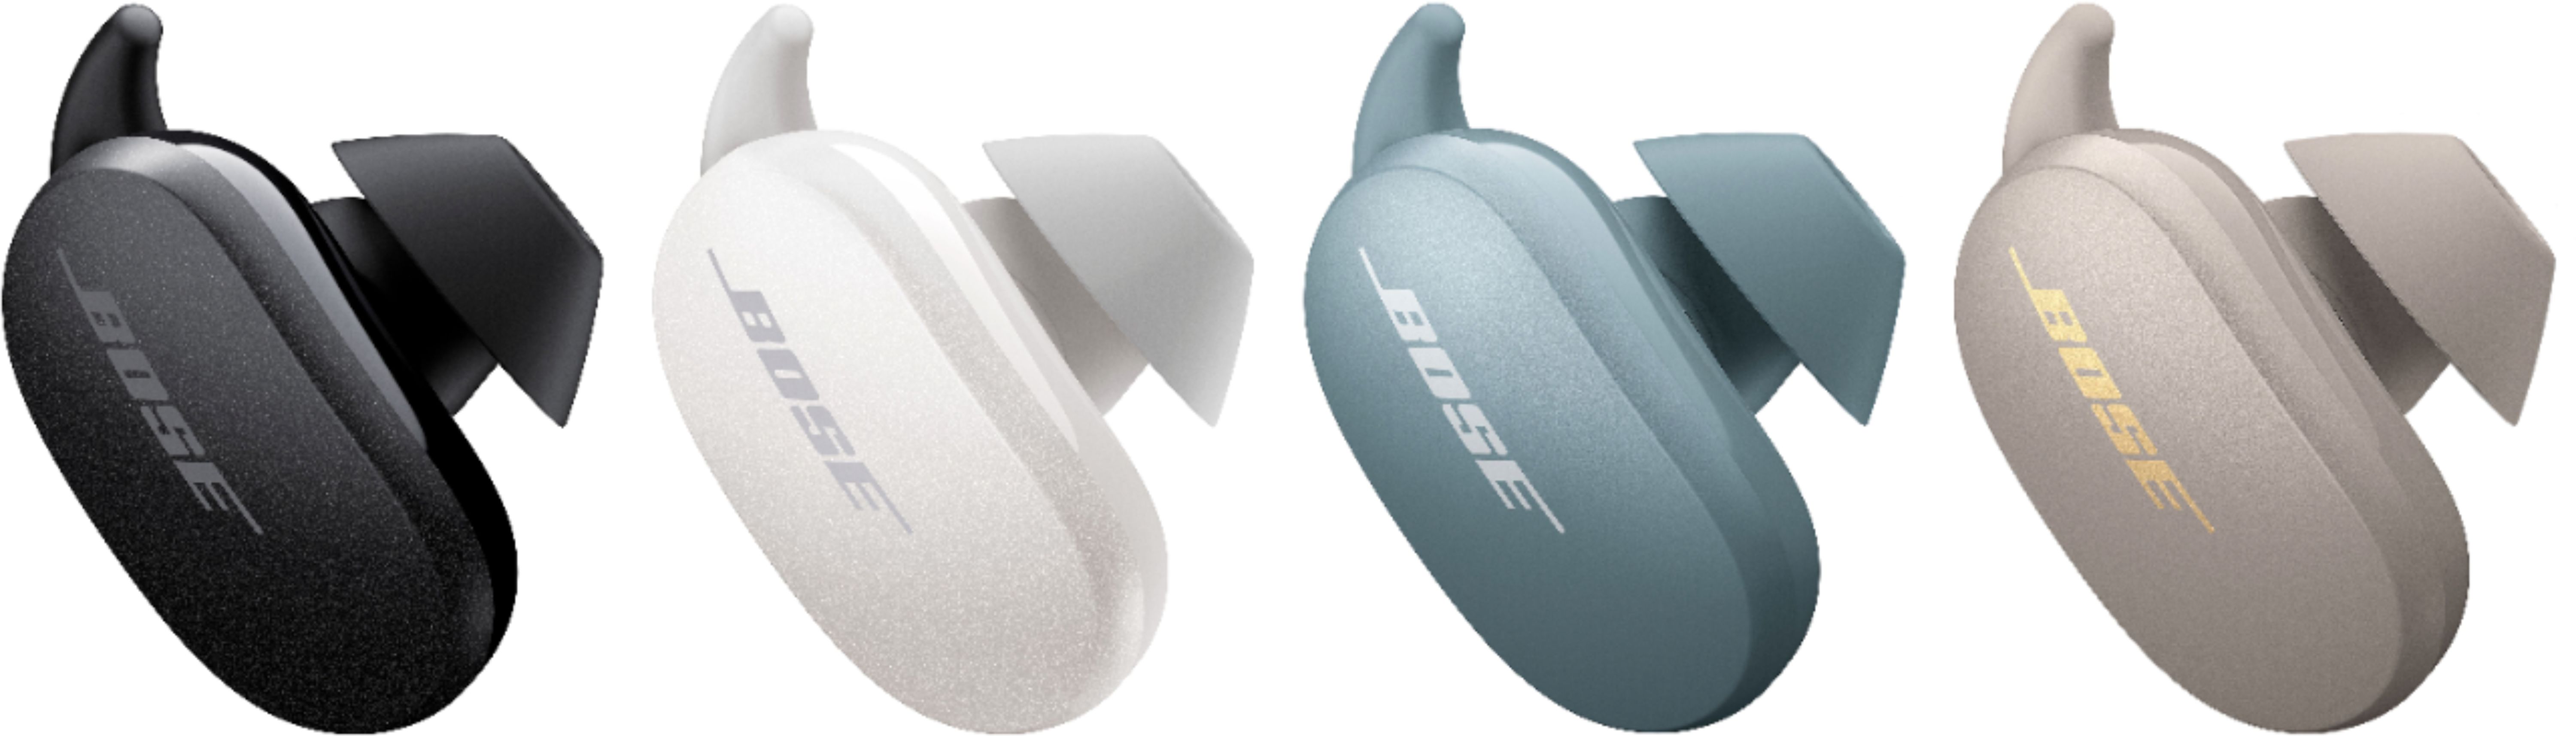 Best Buy: Bose QuietComfort Earbuds True Wireless Noise Cancelling 